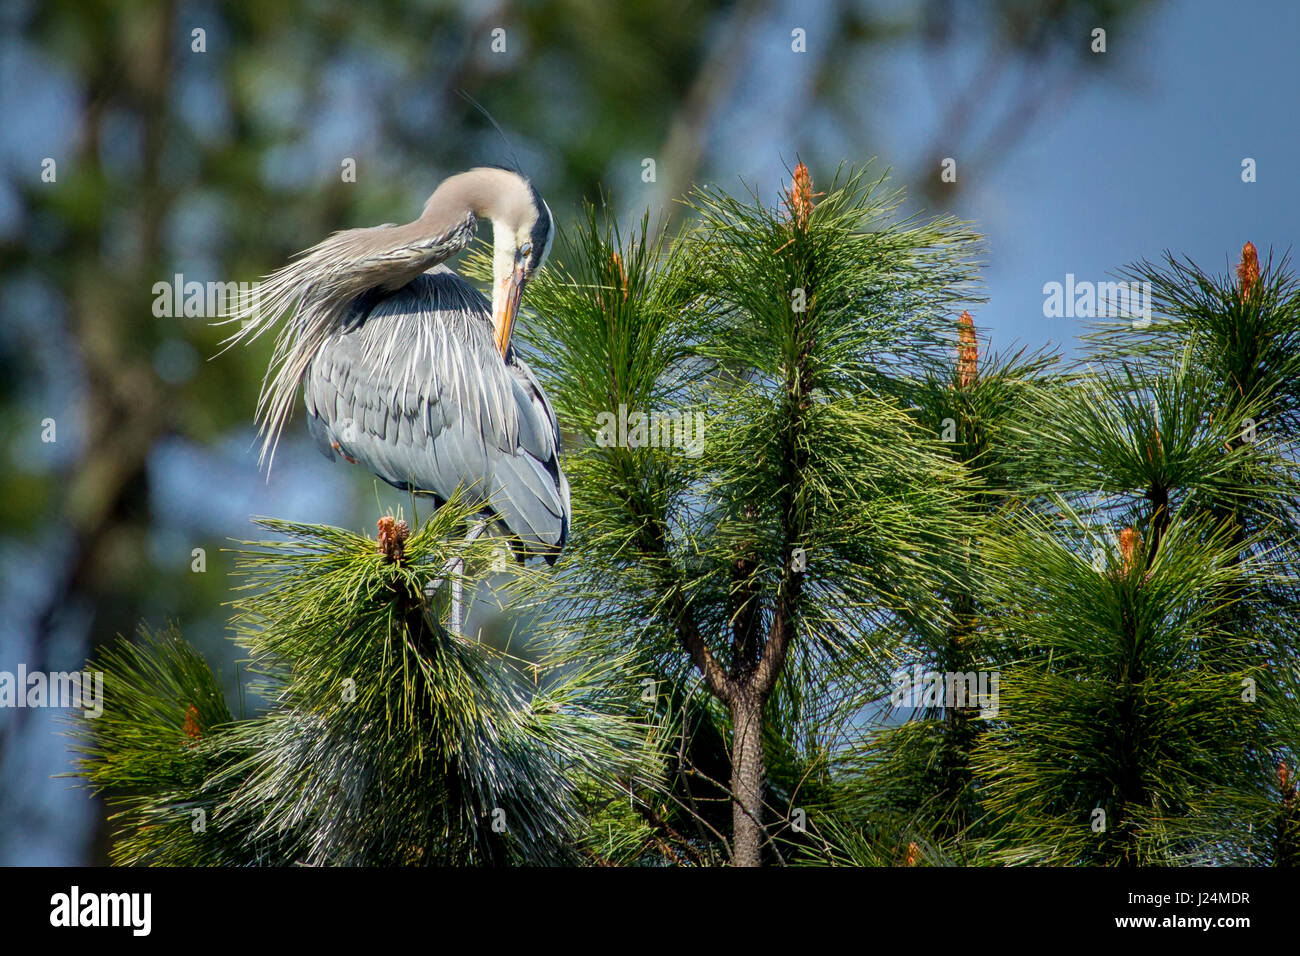 A great blue heron in the tree by Fernan Lake in Idaho preens itself. Stock Photo